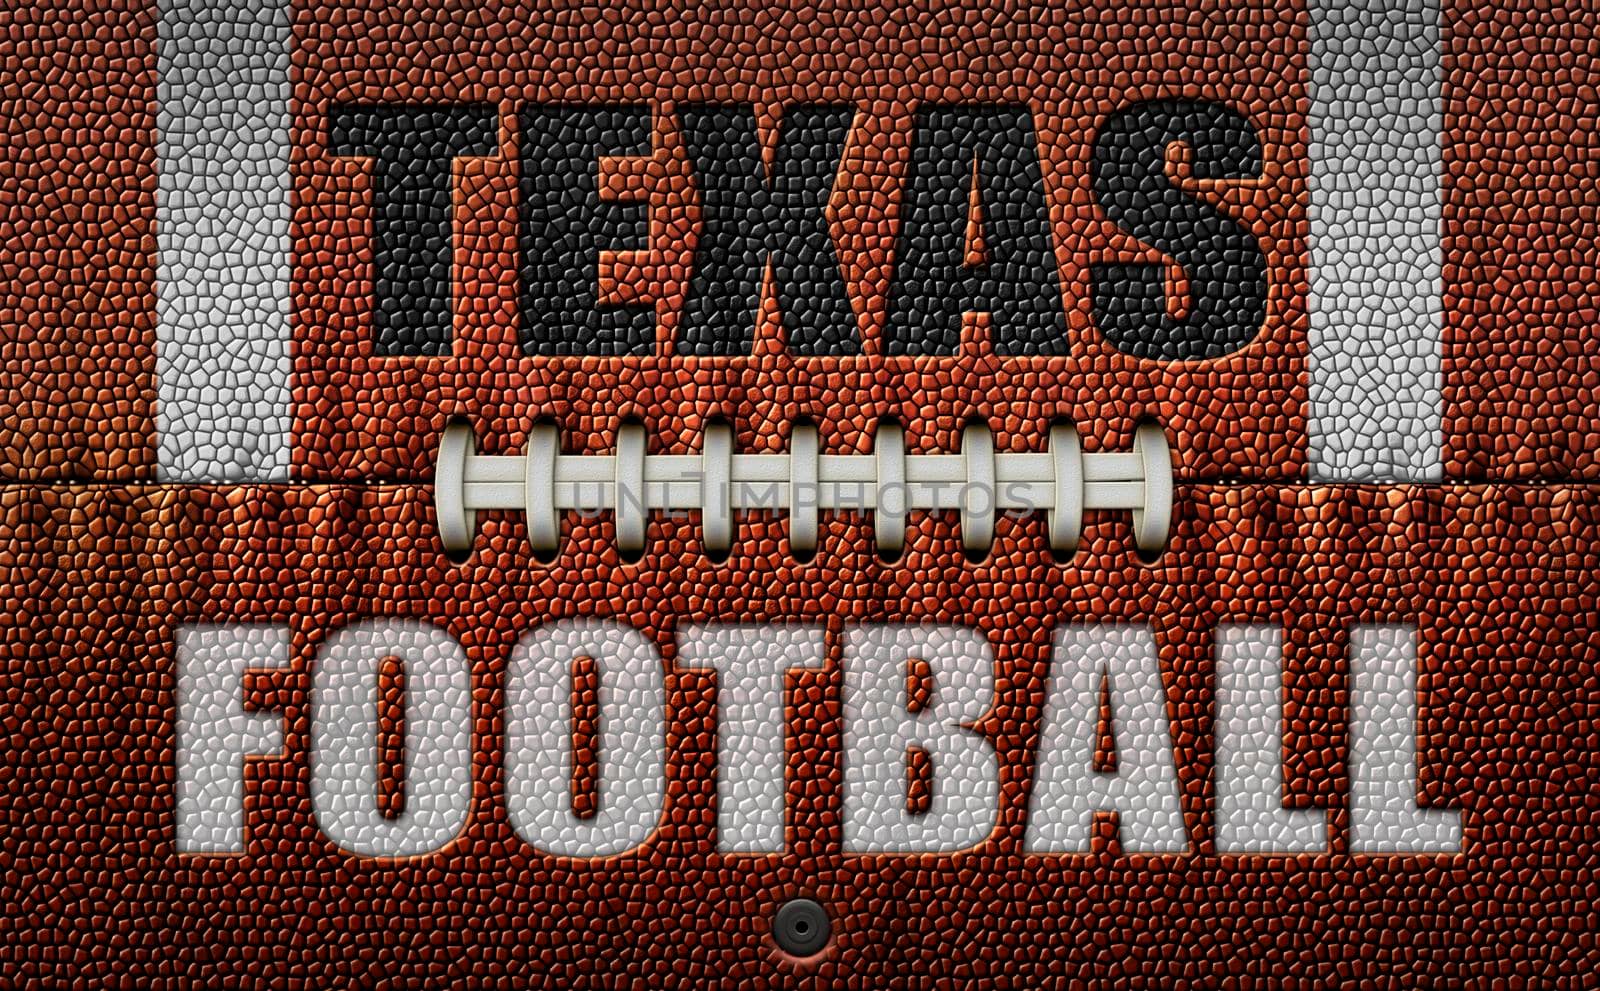 Texas Football Text on a Flattened Football by jimlarkin